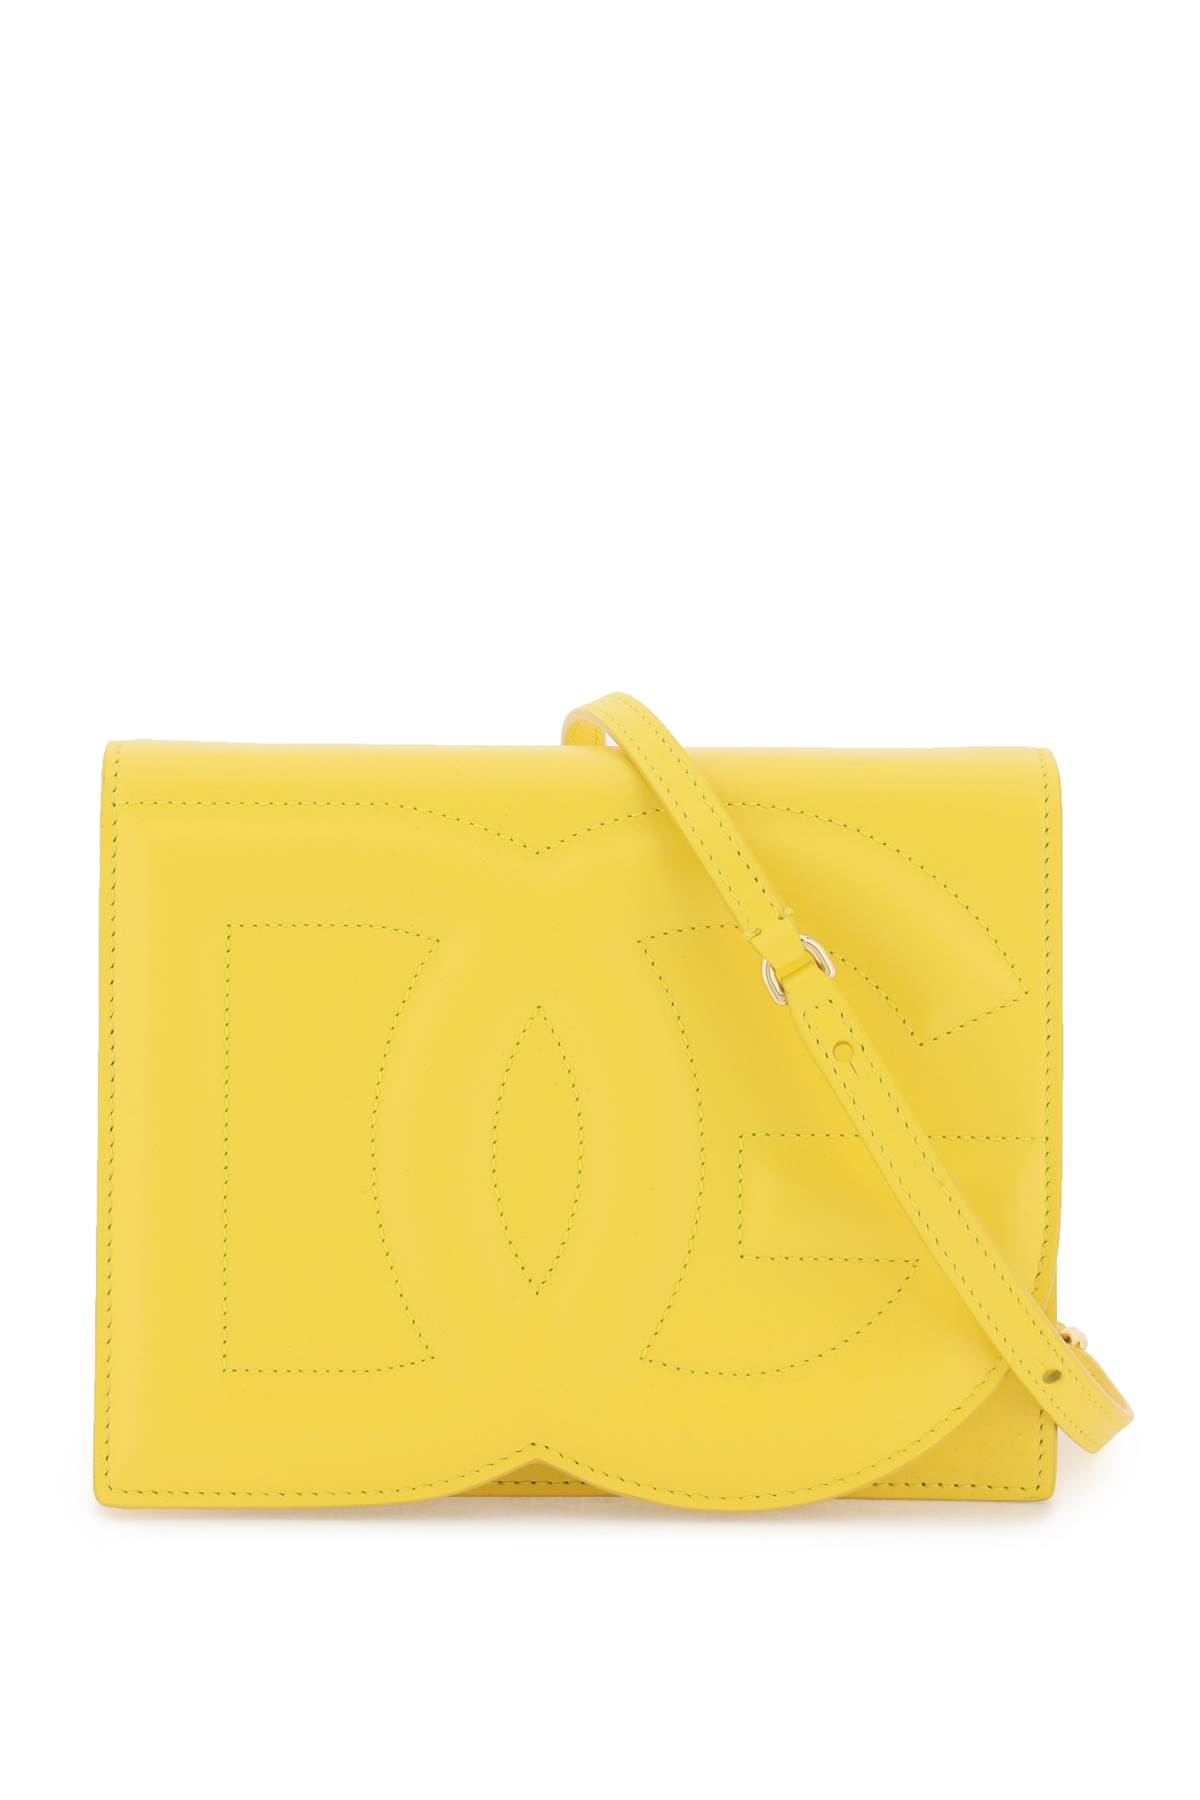 Dolce & Gabbana Leather Crossbody Bag In Giallo